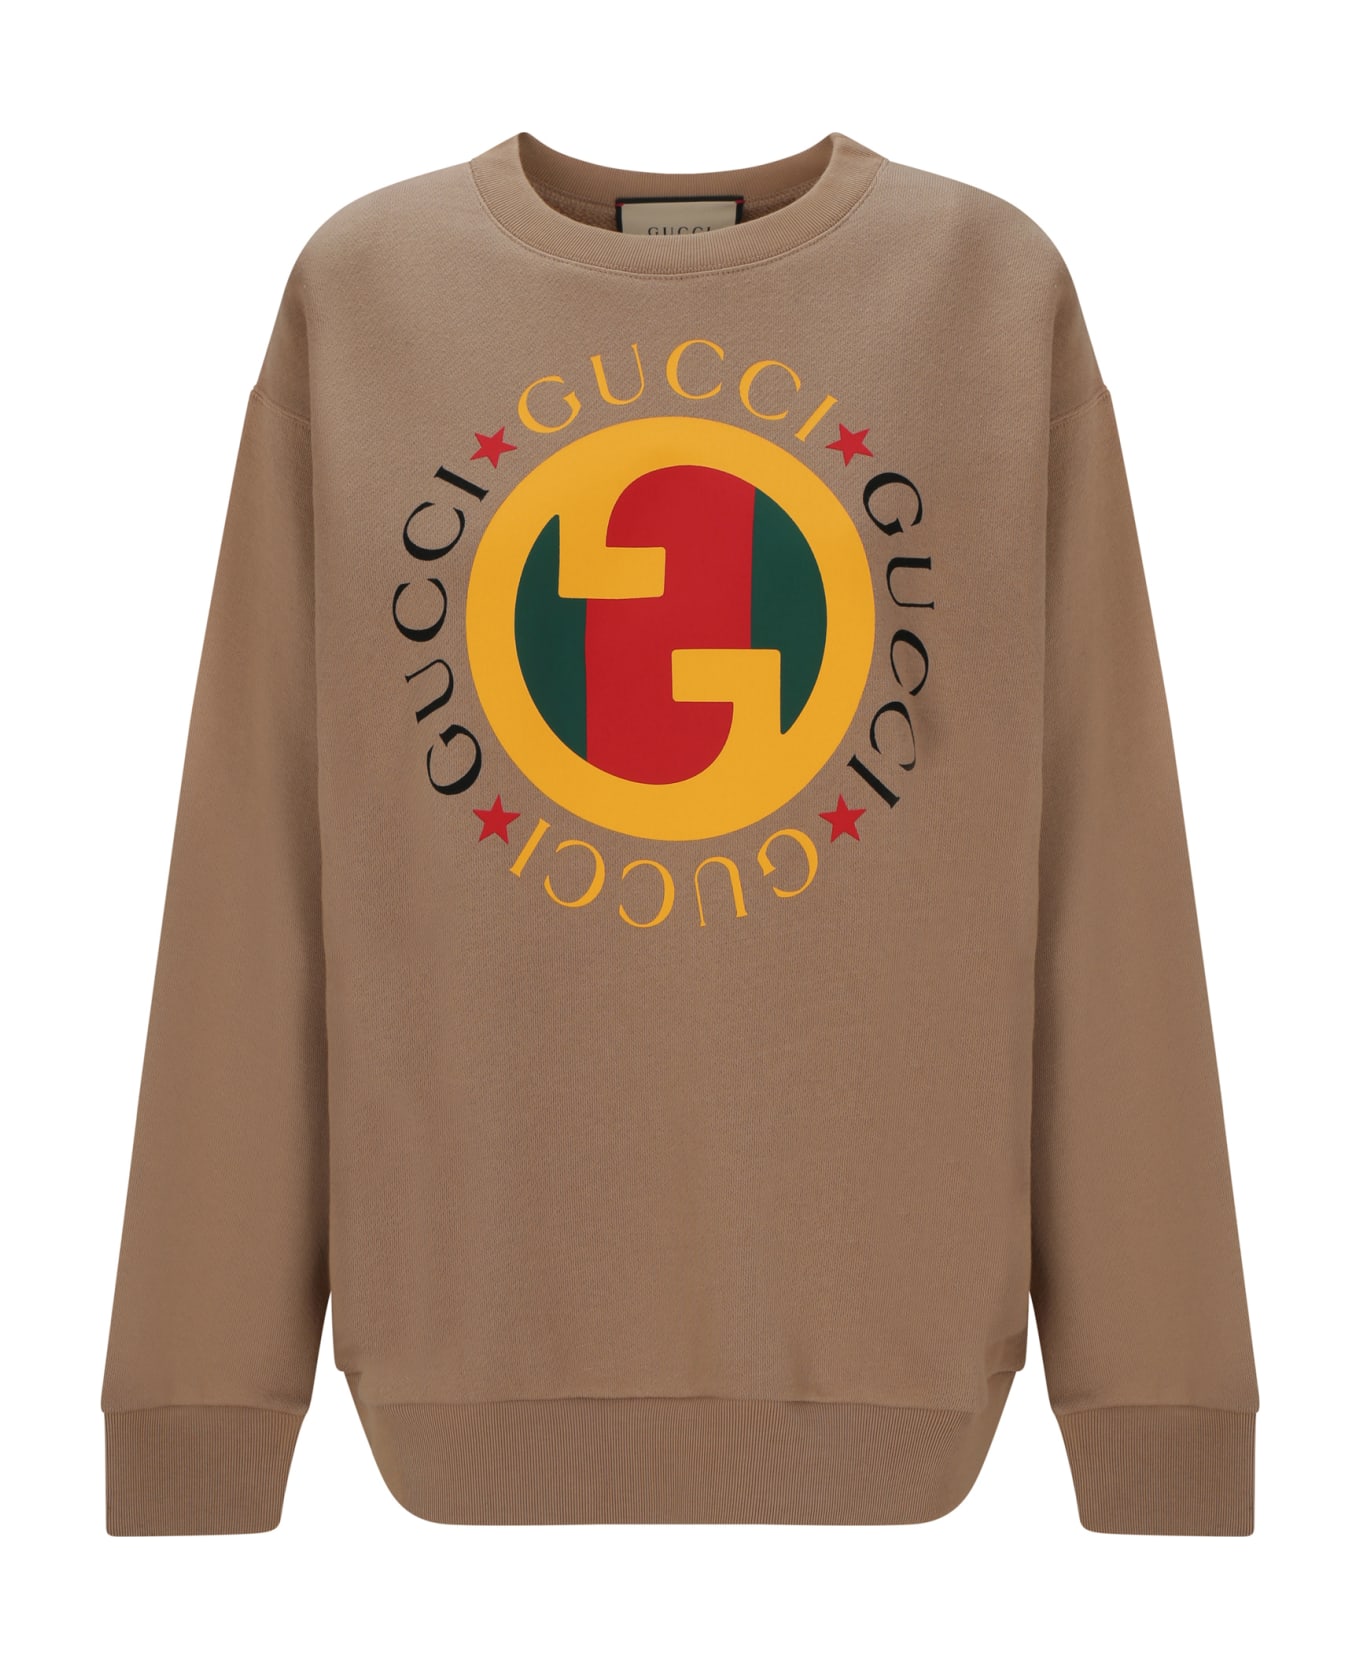 Gucci Sweatshirt - Camel